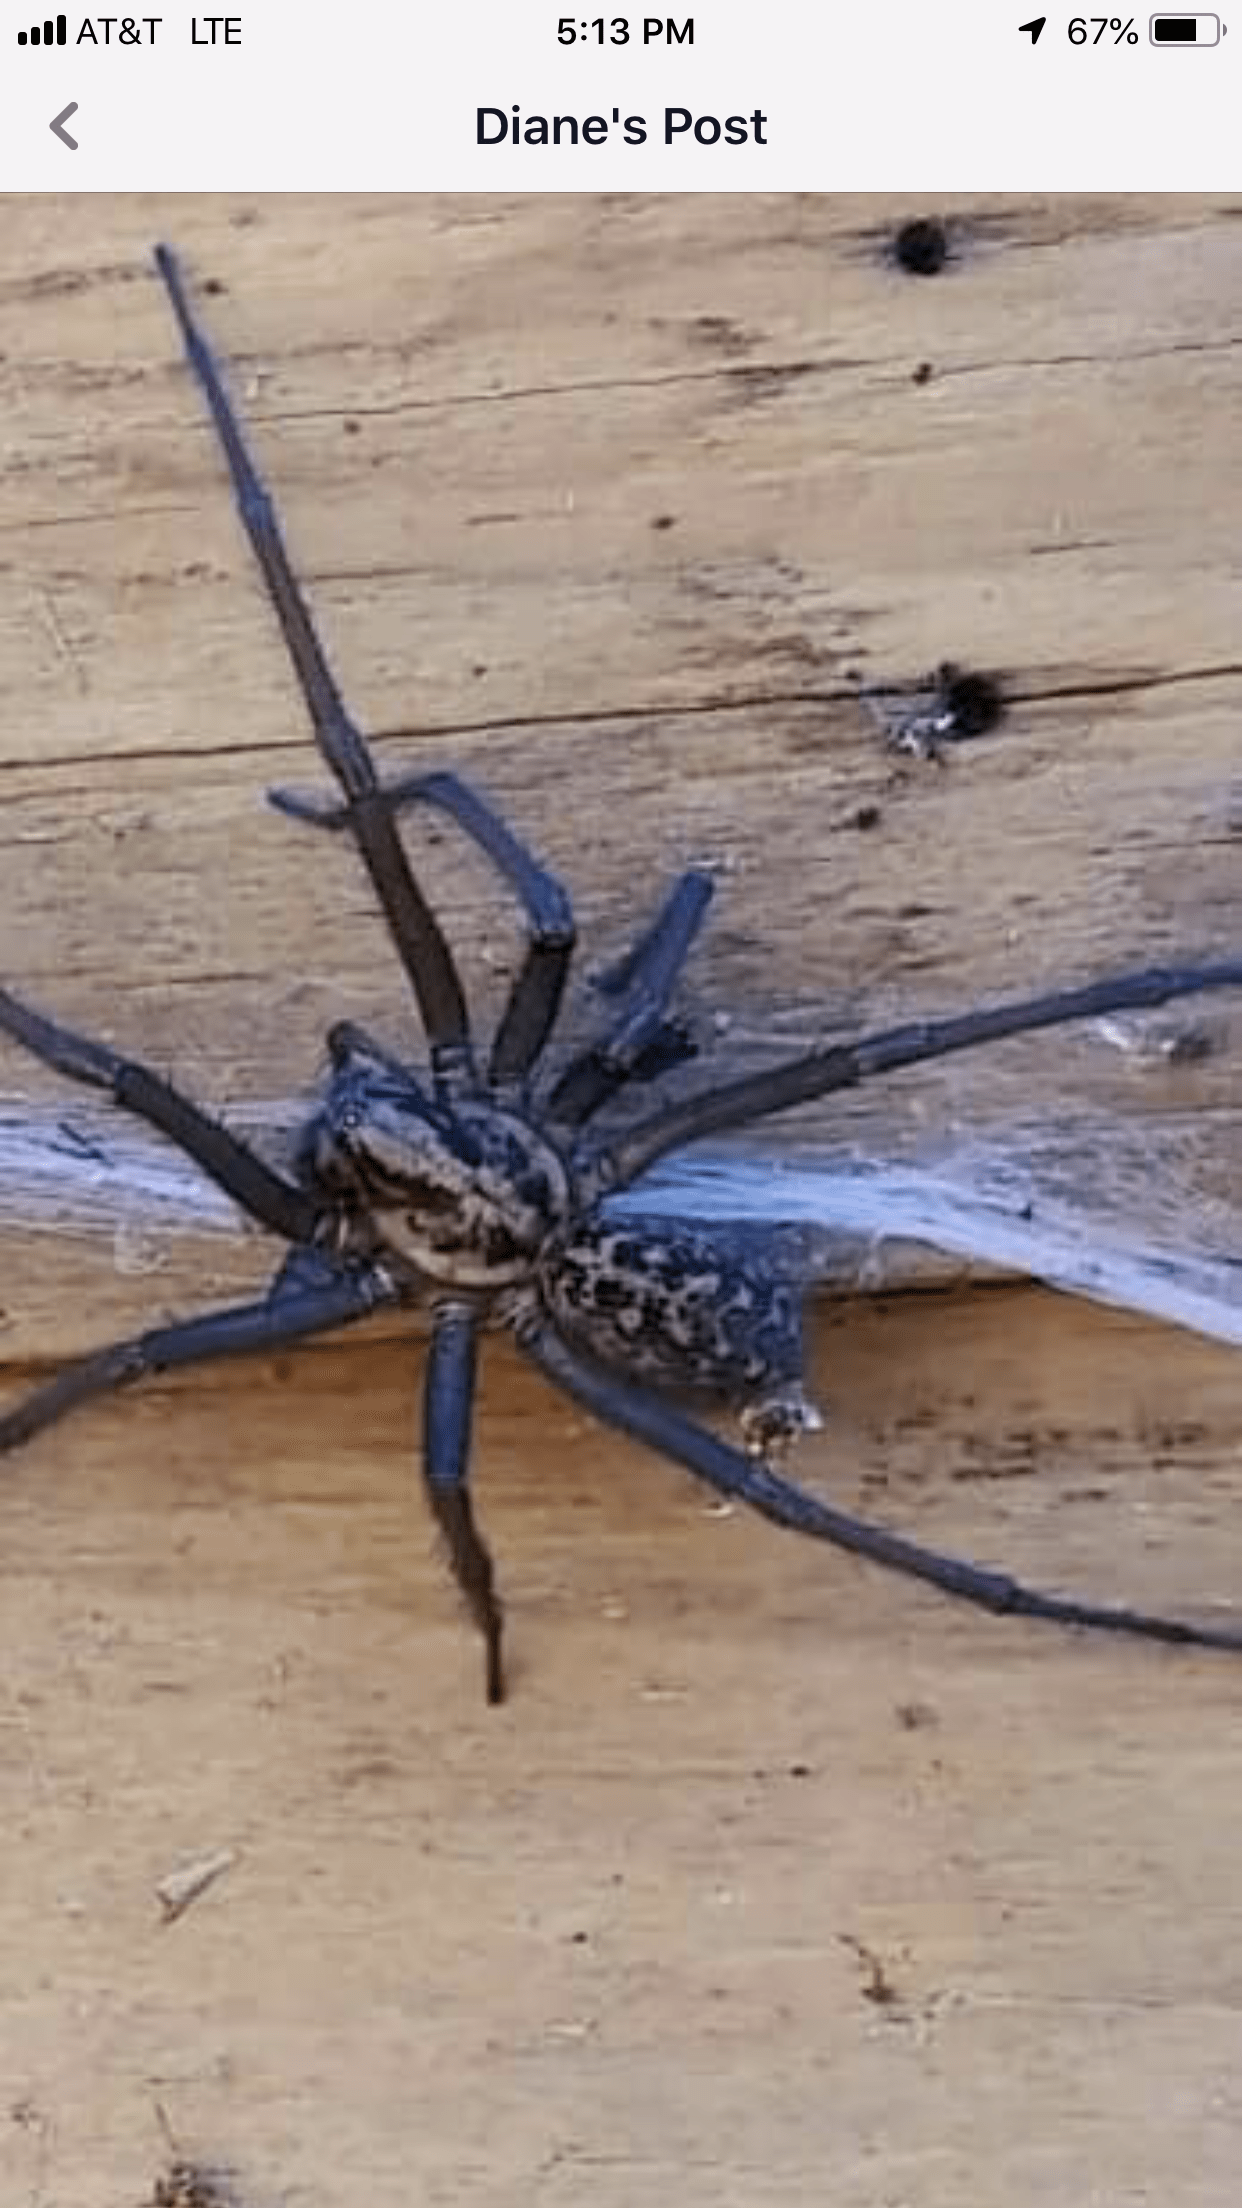 Picture of Eratigena duellica (Giant House Spider) - Dorsal